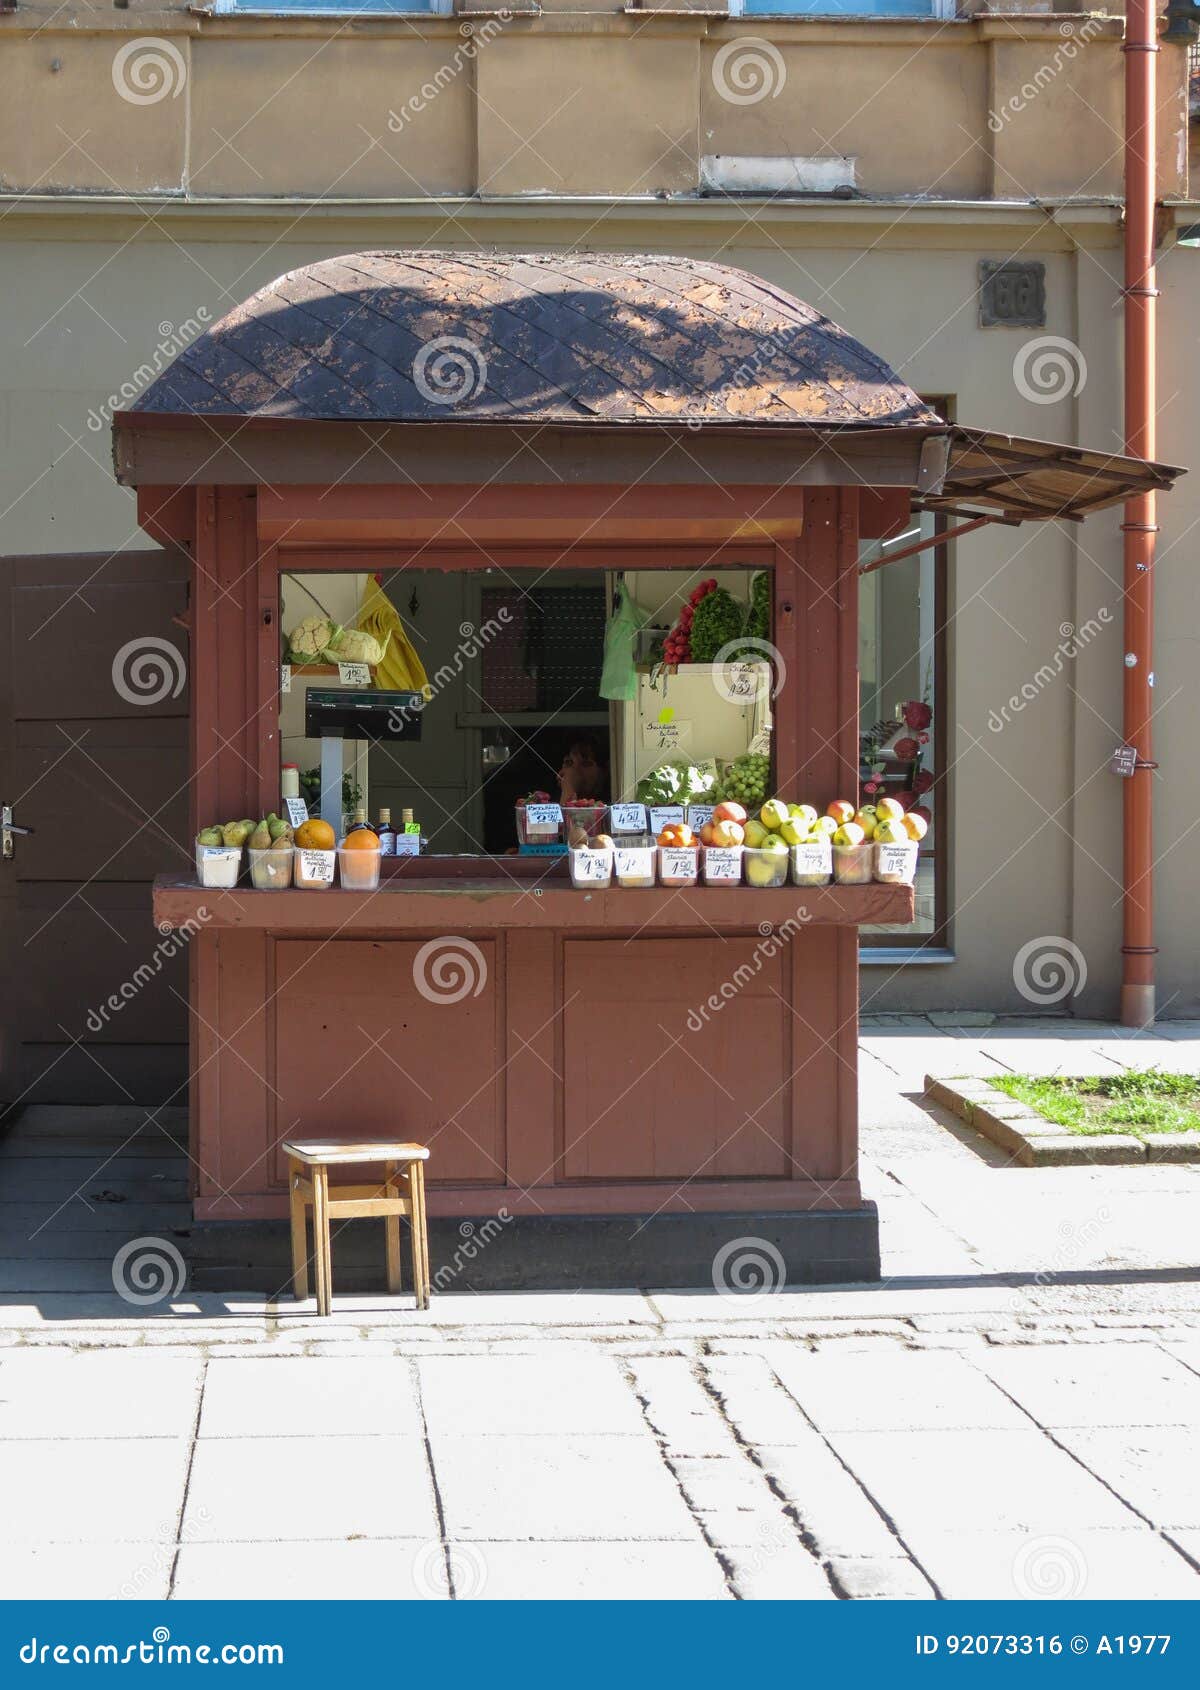 Fruit and vegetables kiosk in Kaunas. KAUNAS, LITHUANIA - CIRCA APRIL 2017: fruit and vegetables kiosk